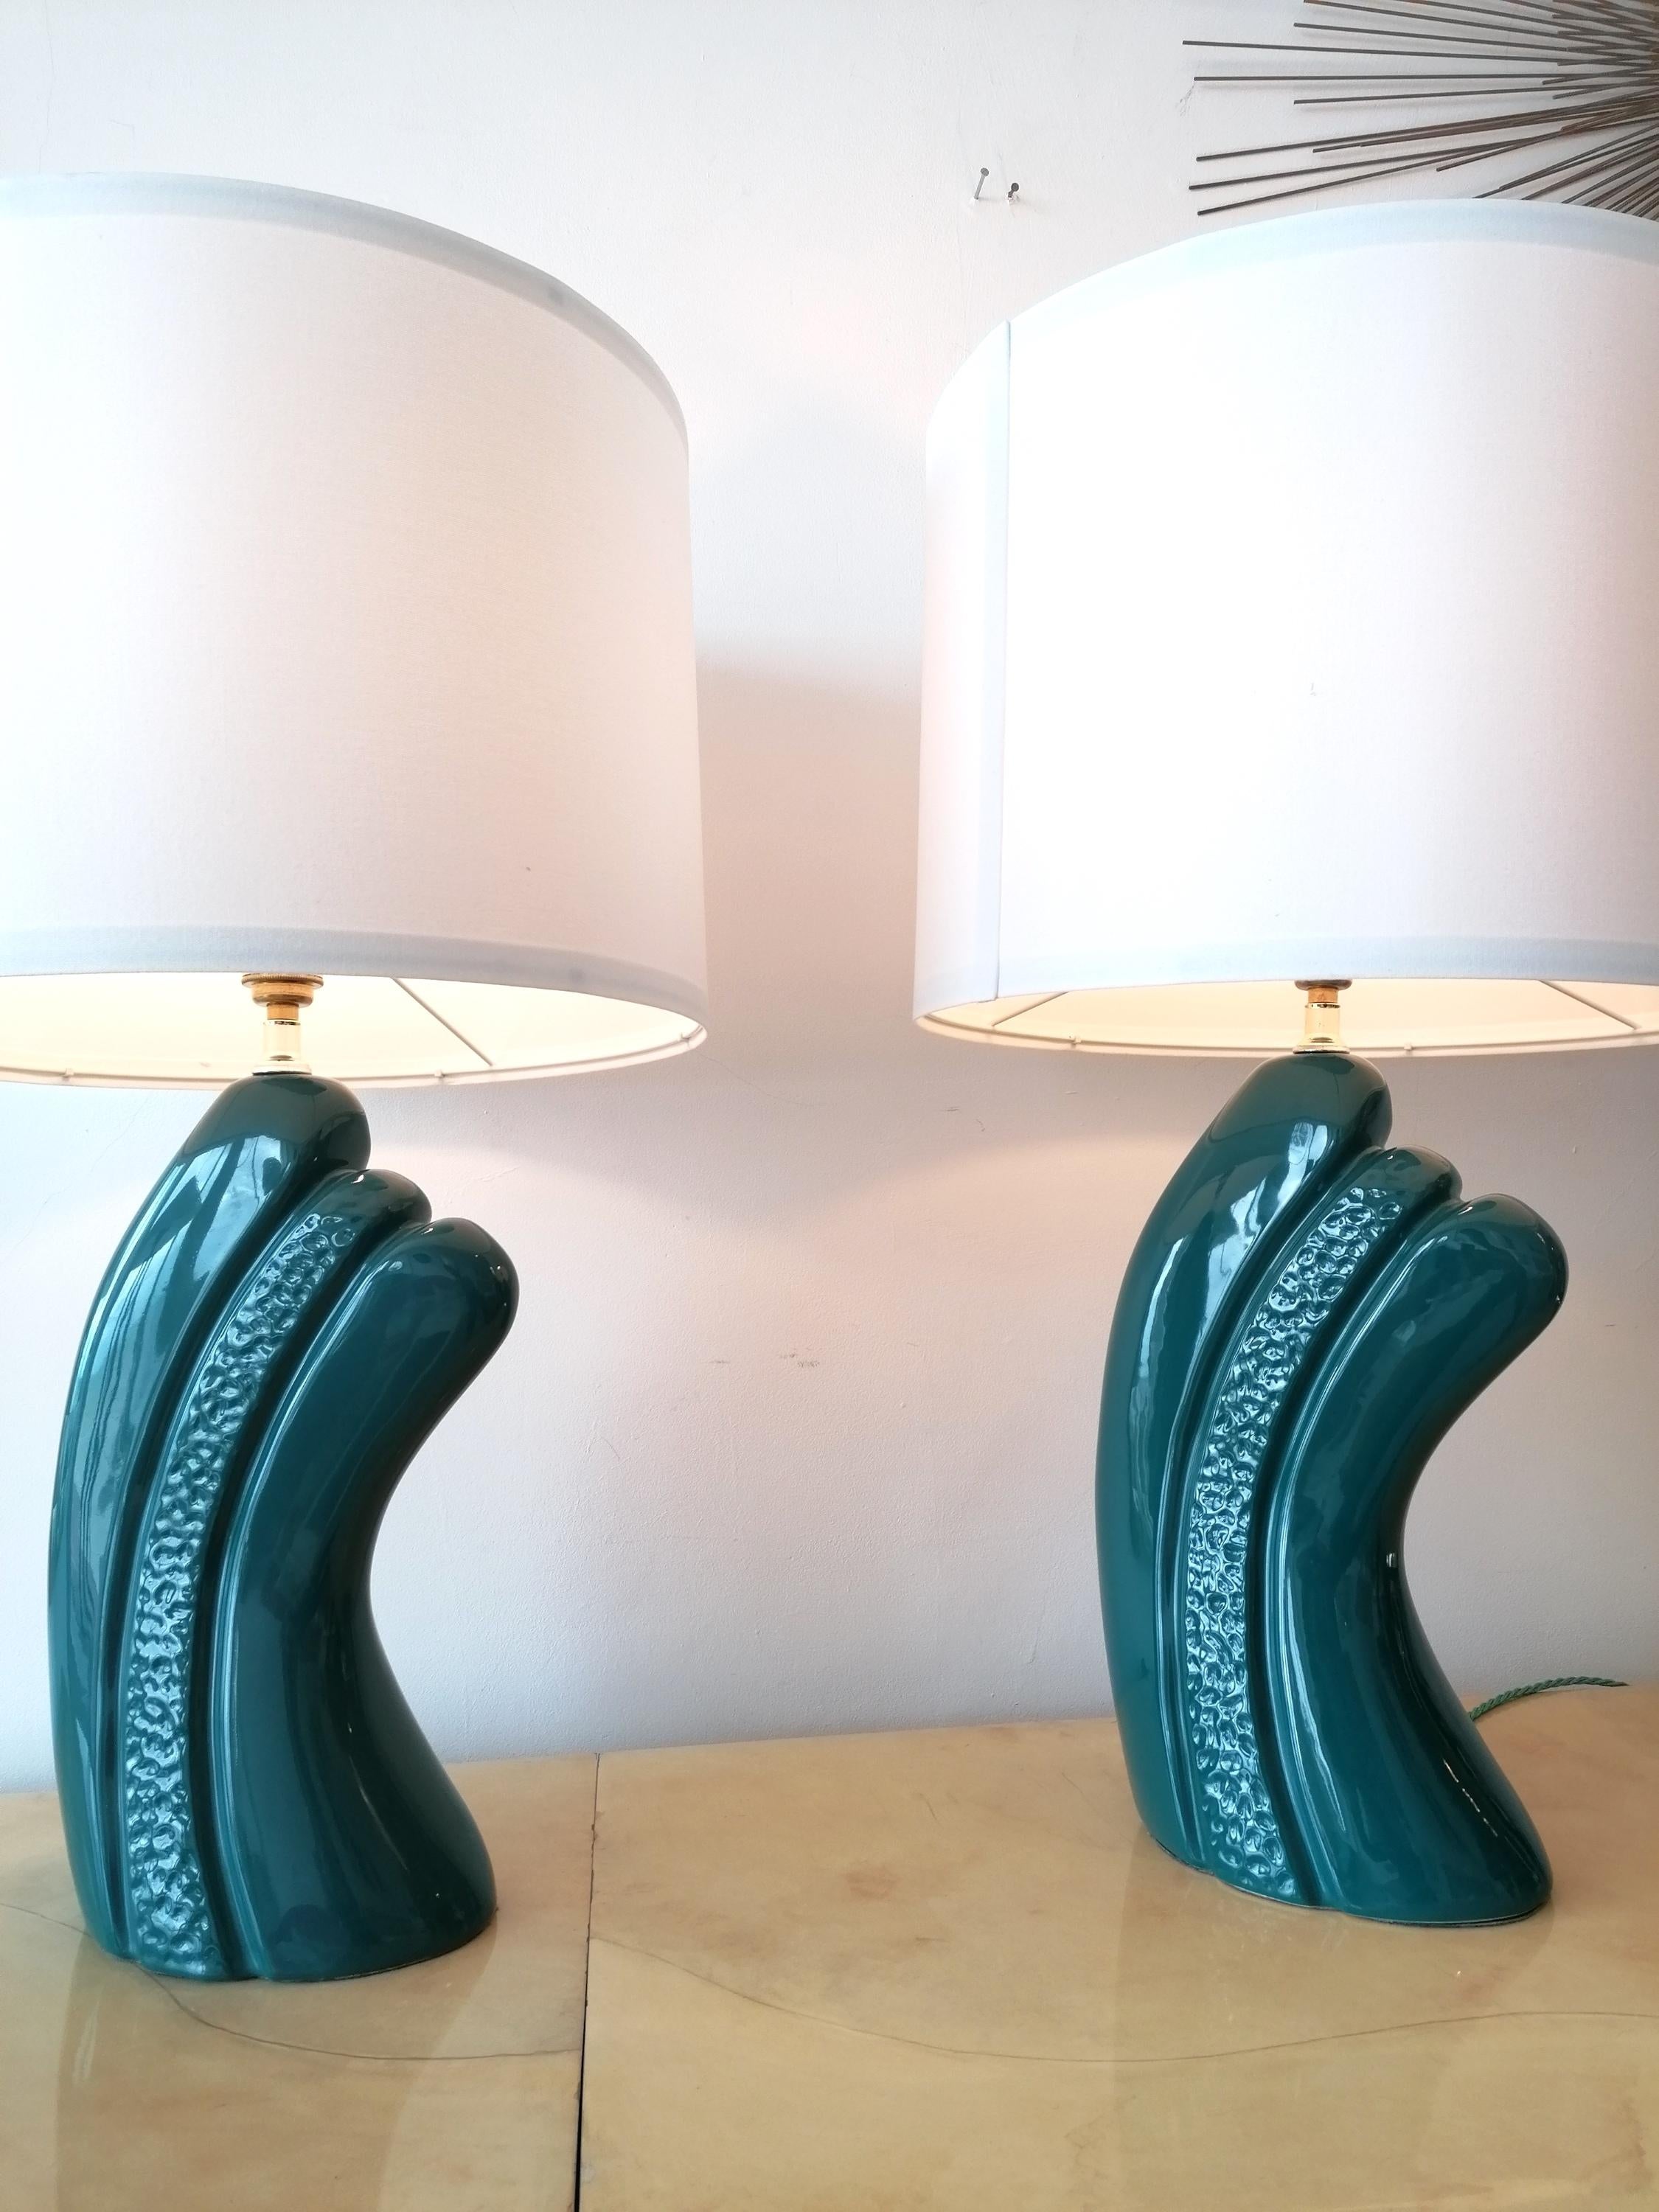 American Pair of Dark, Intense Blue / Green Ceramic Lamps, USA 1980s Art Deco Revival For Sale